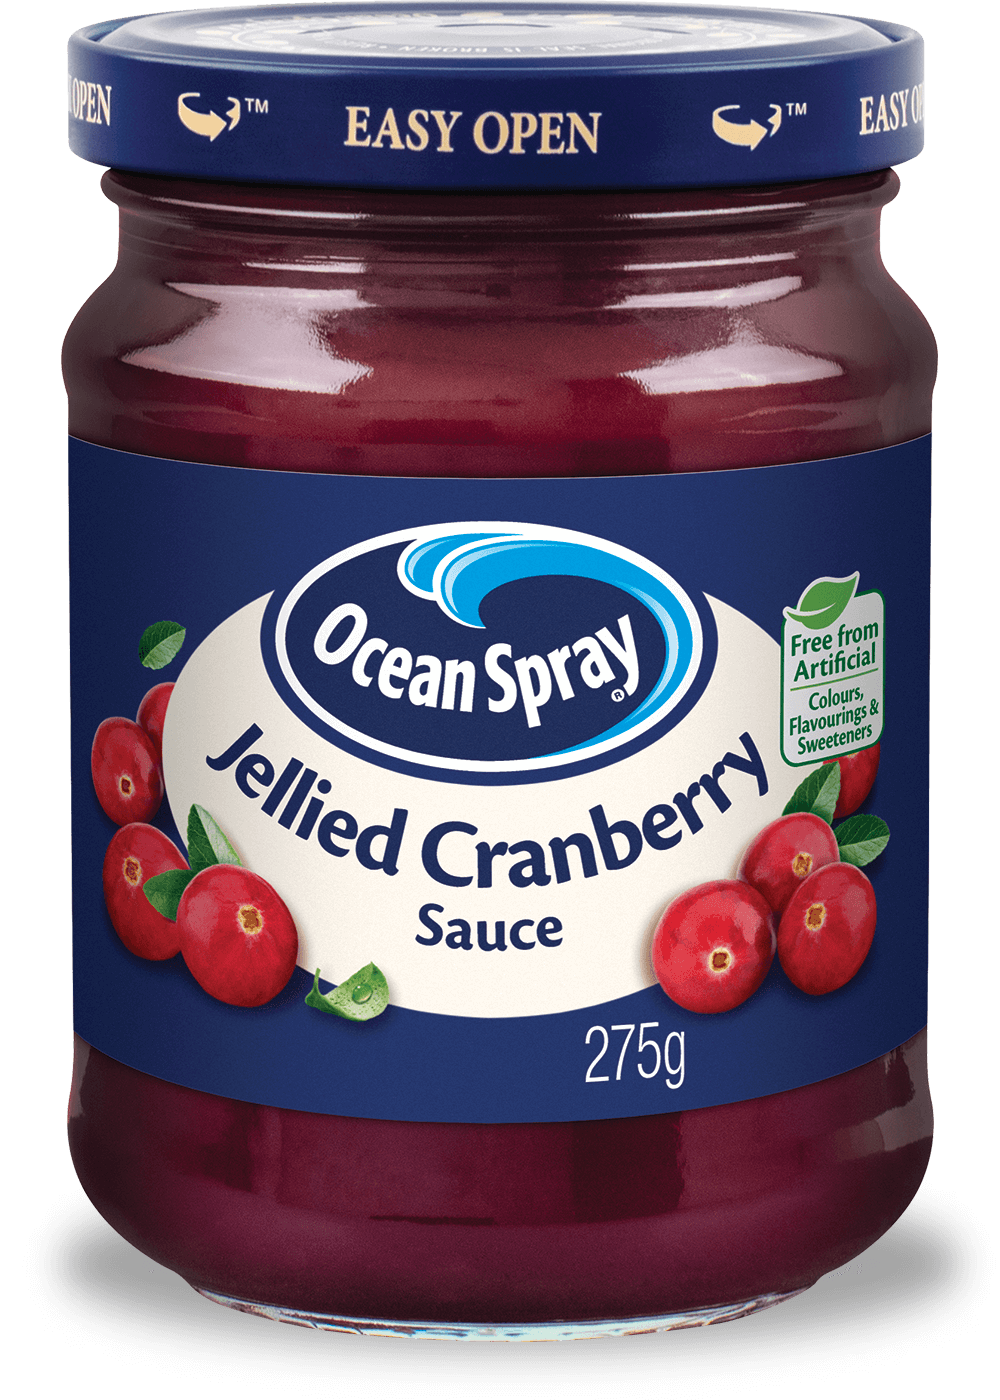 Ocean Spray Cranberry Sauce Recipe On Bag Homemade Whole